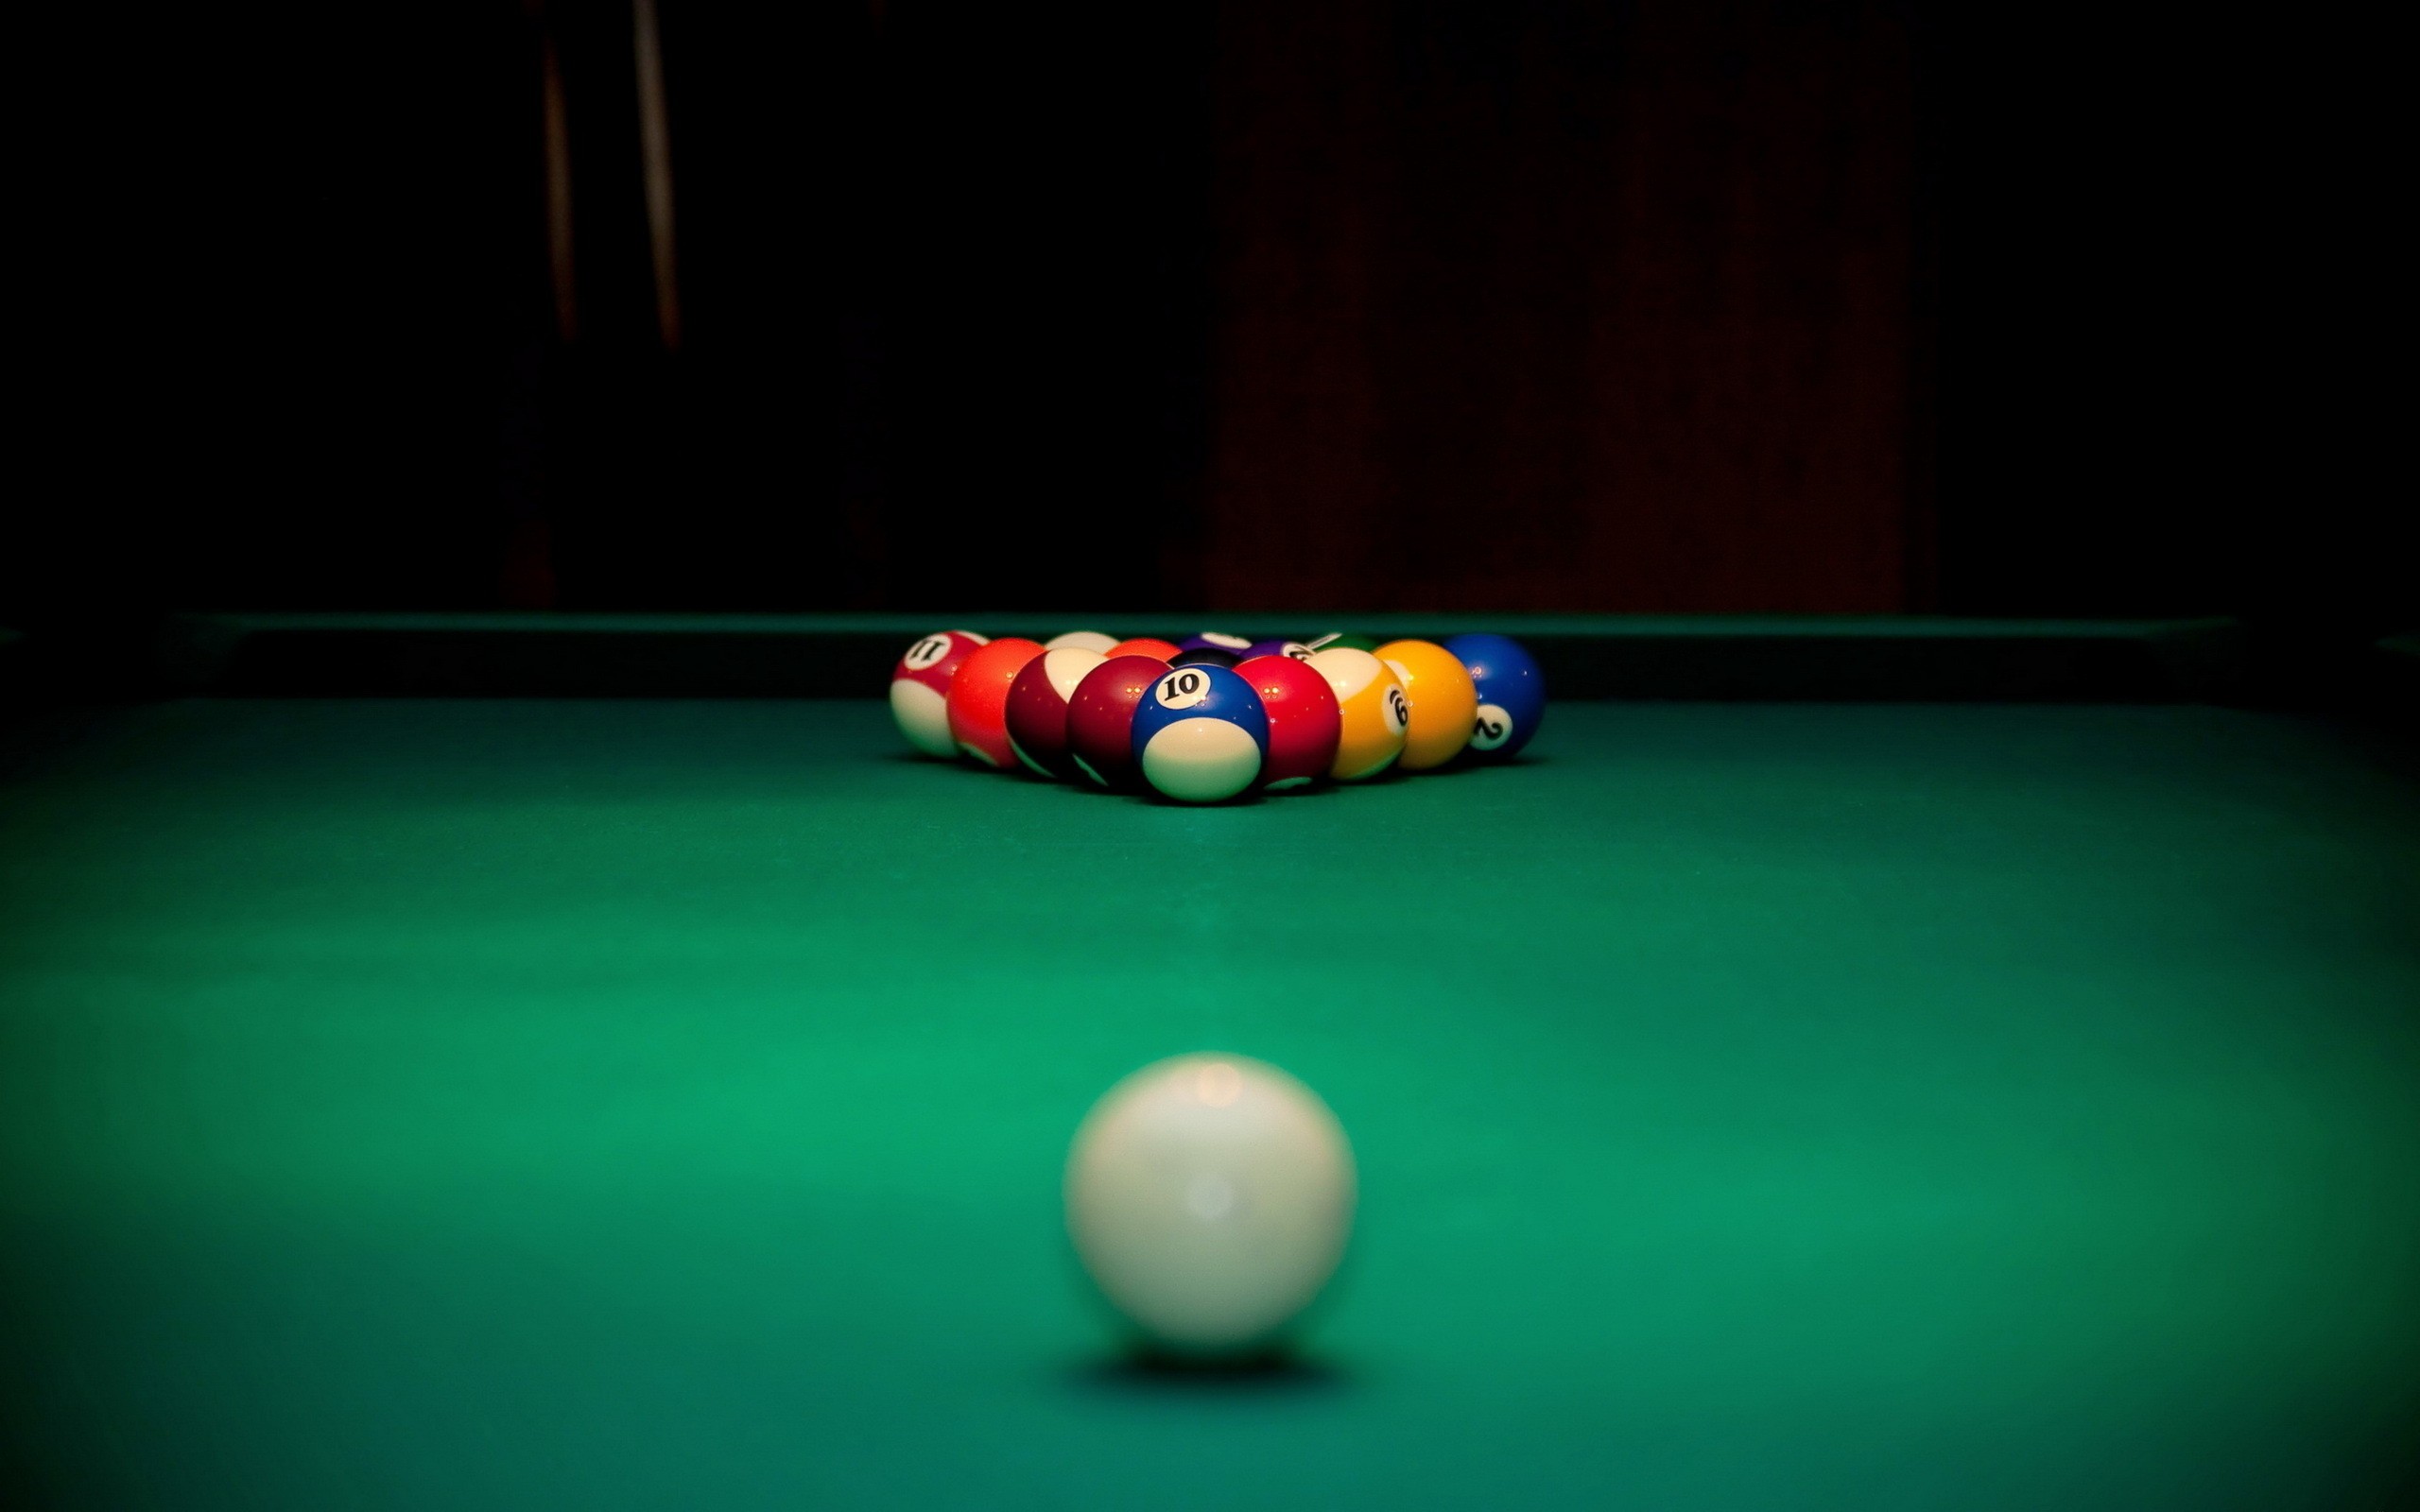 pool table wallpaper,billiard table,pool,billiard ball,billiards,indoor games and sports